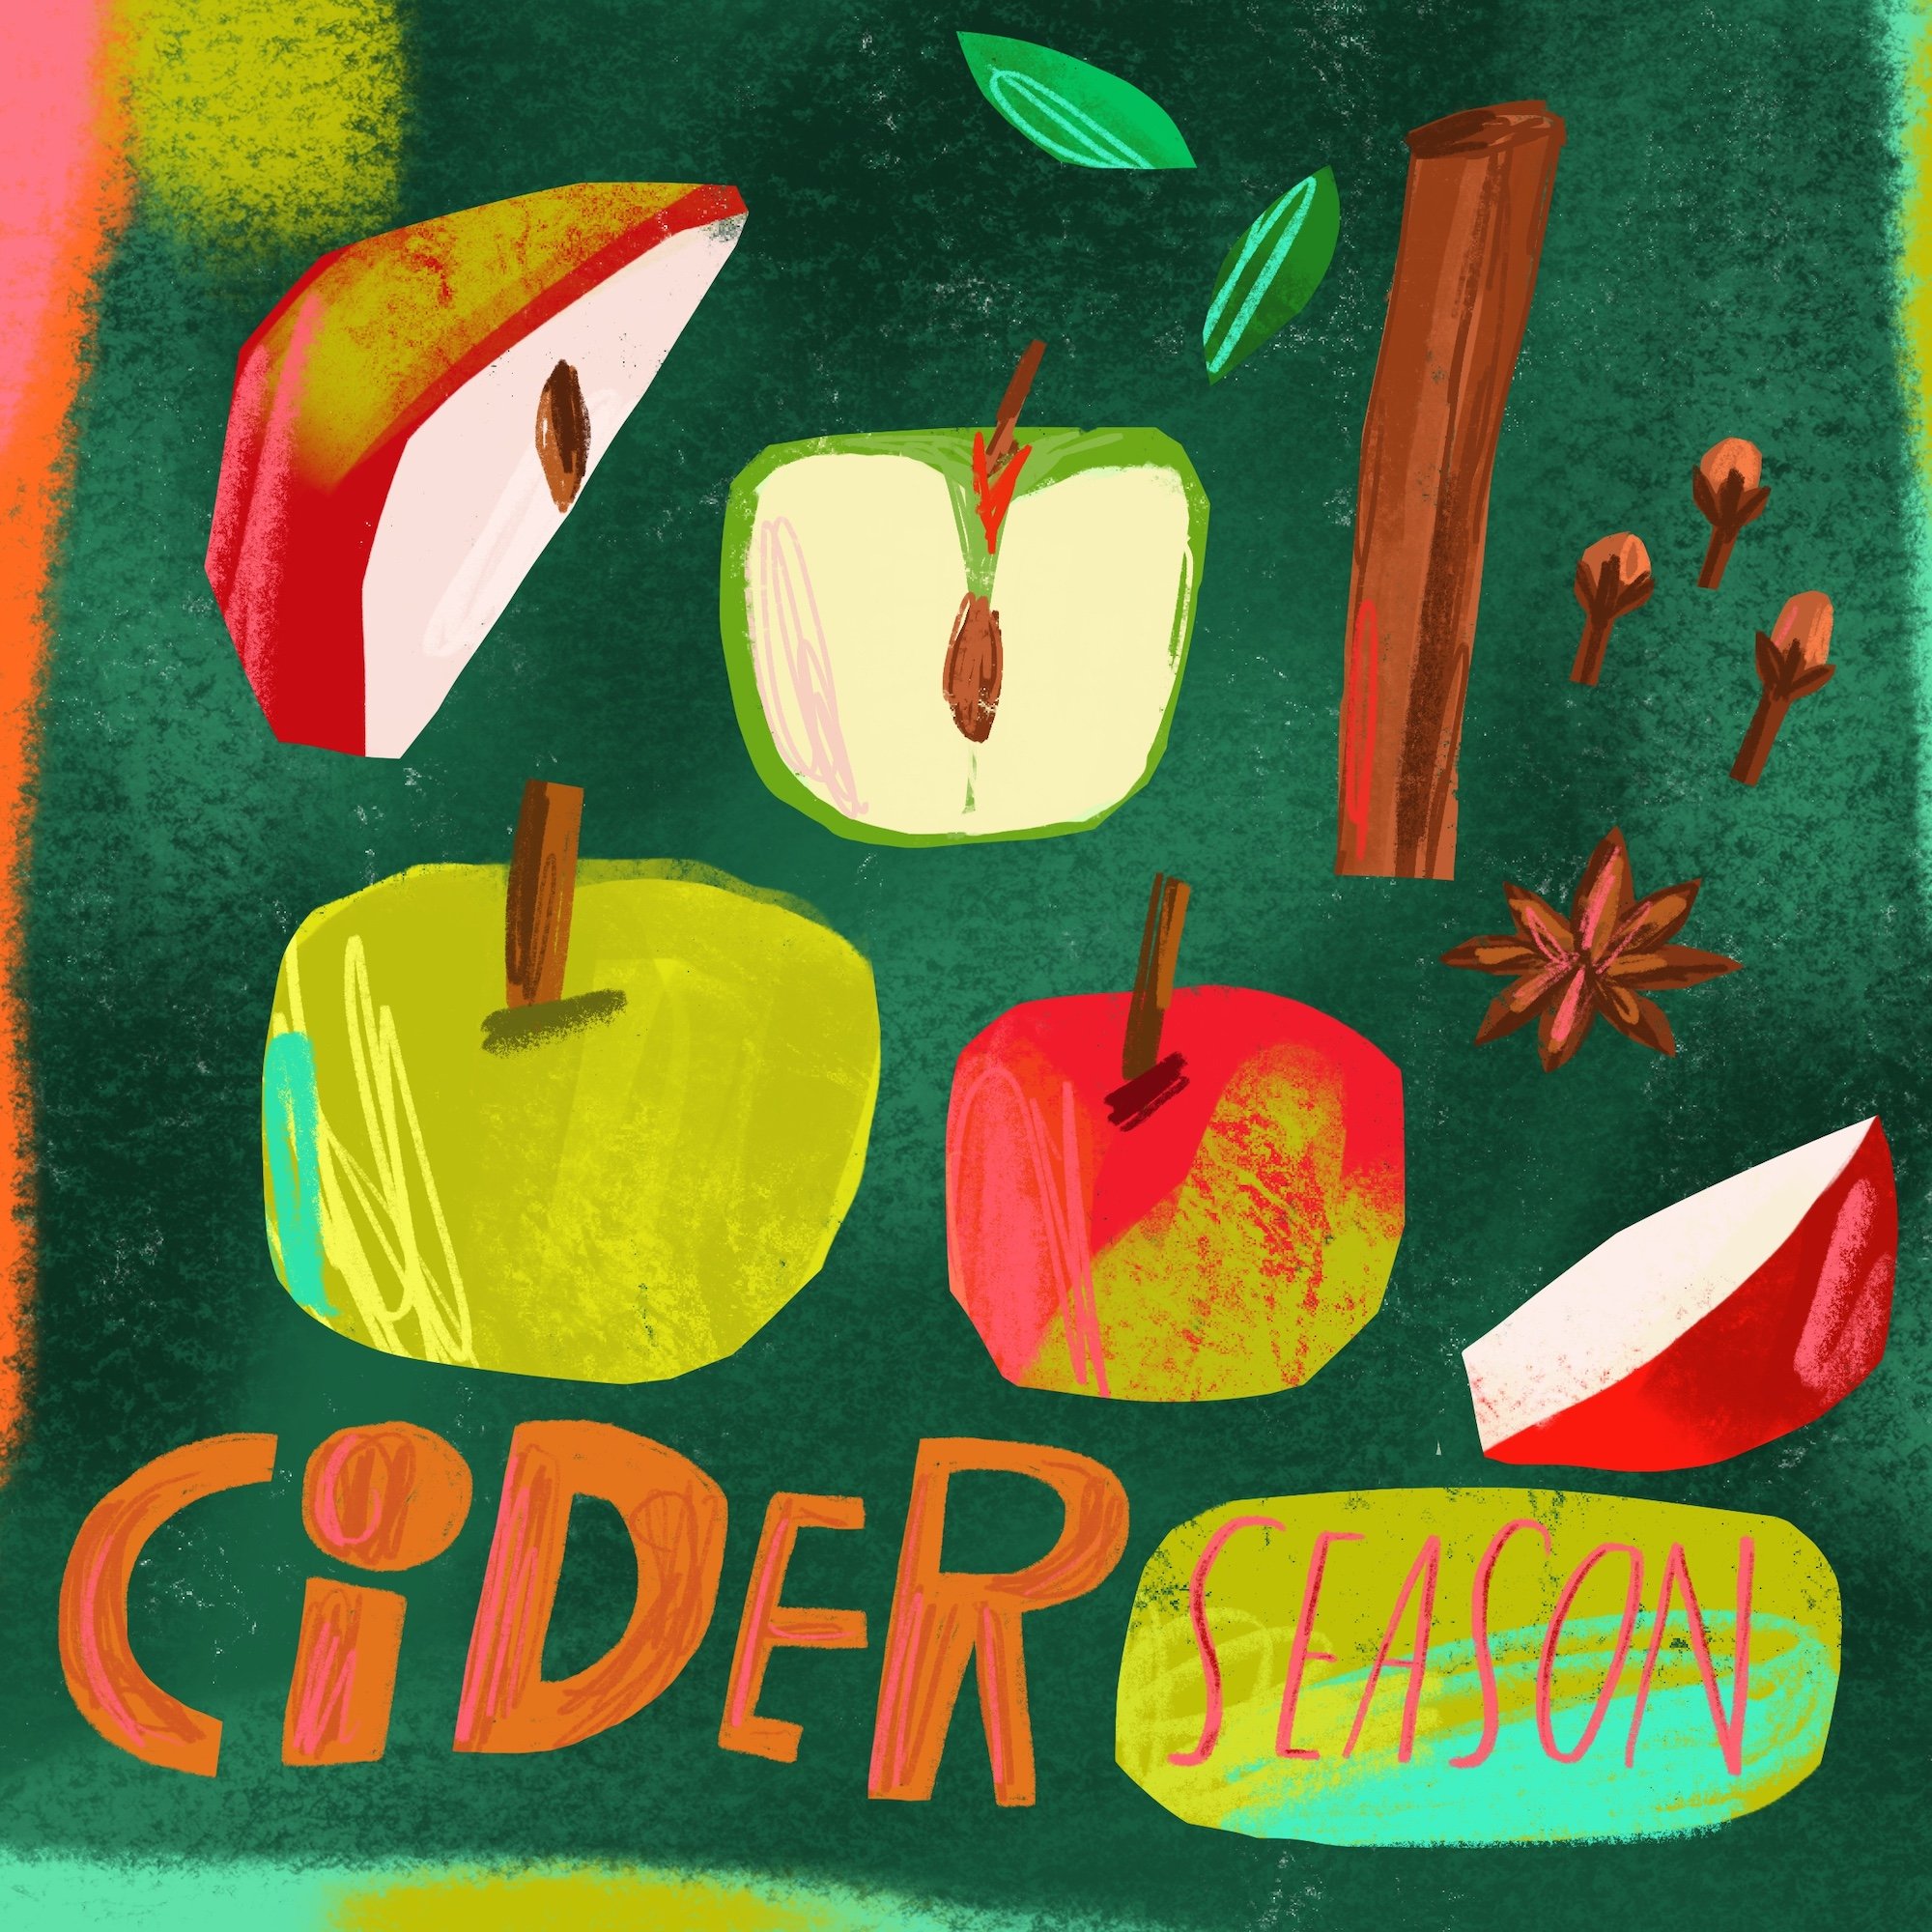 Illustrated ingredients for apple cider